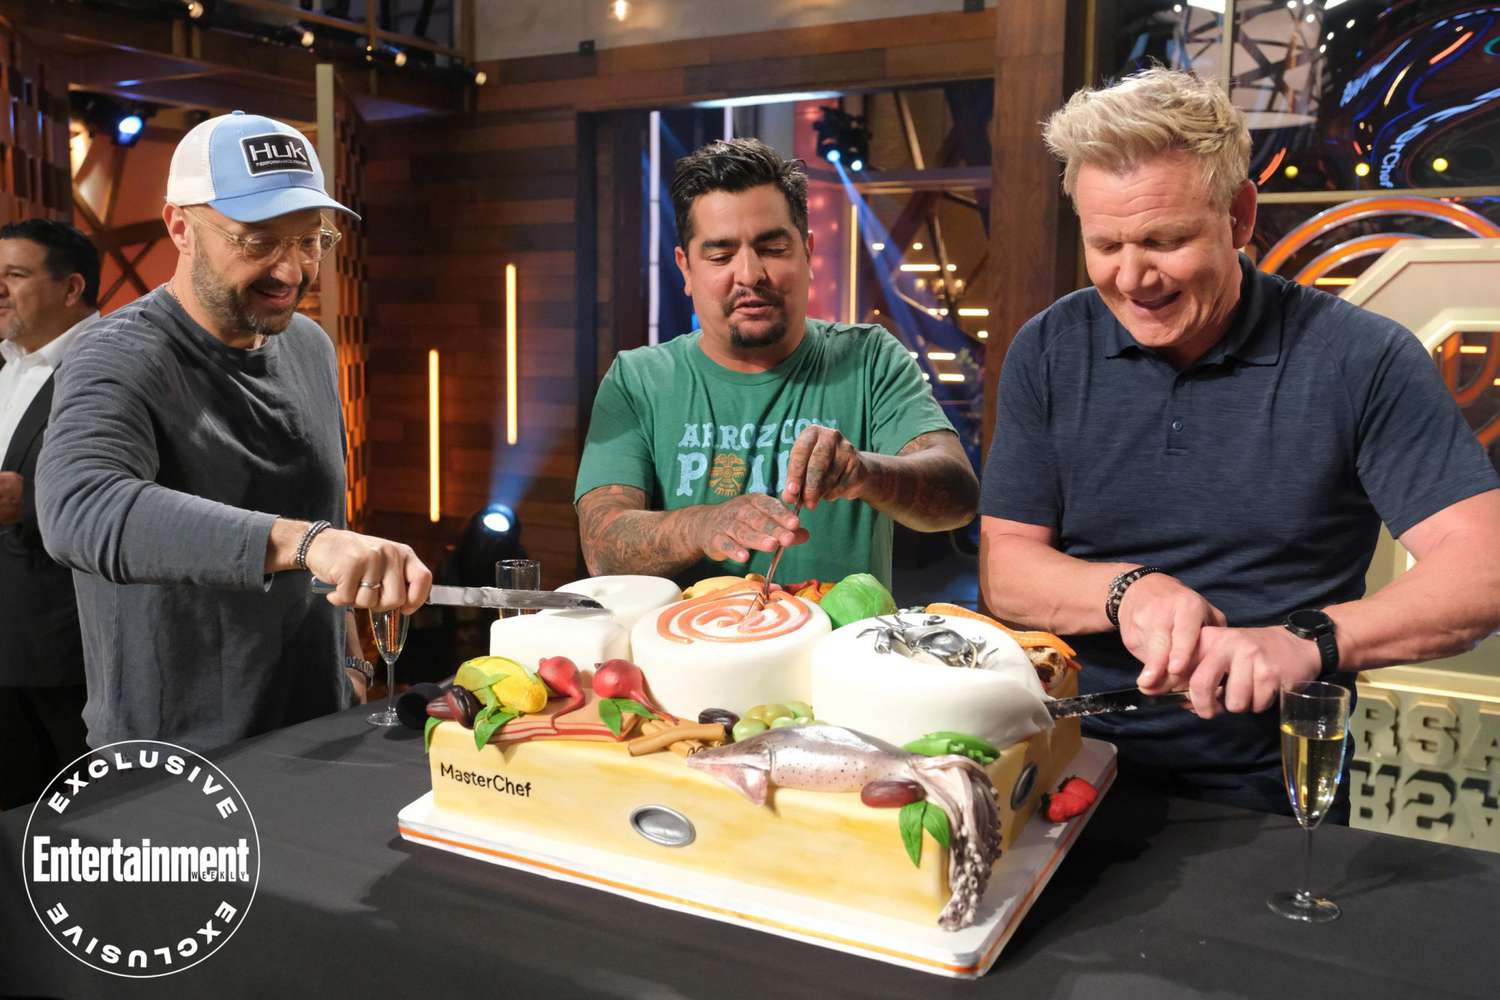 MasterChef 200th episode Joe Bastianich, Gordon Ramsay, andAaron Sanchez cutting cake